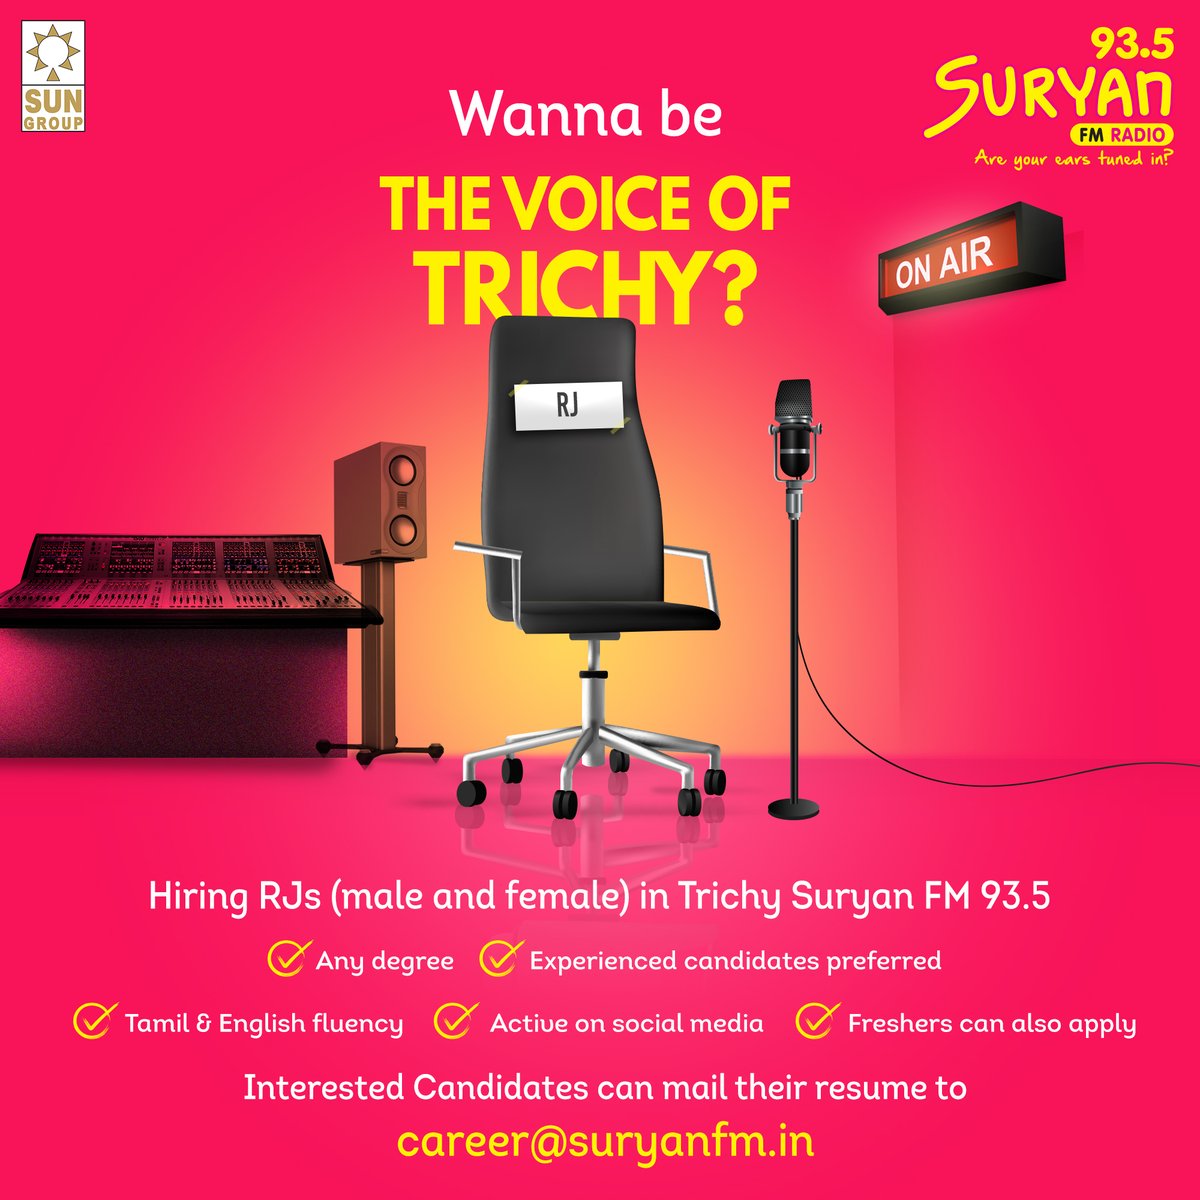 Wanna be the voice of Trichy?

#Trichy #HiringRJs #SuryanFM